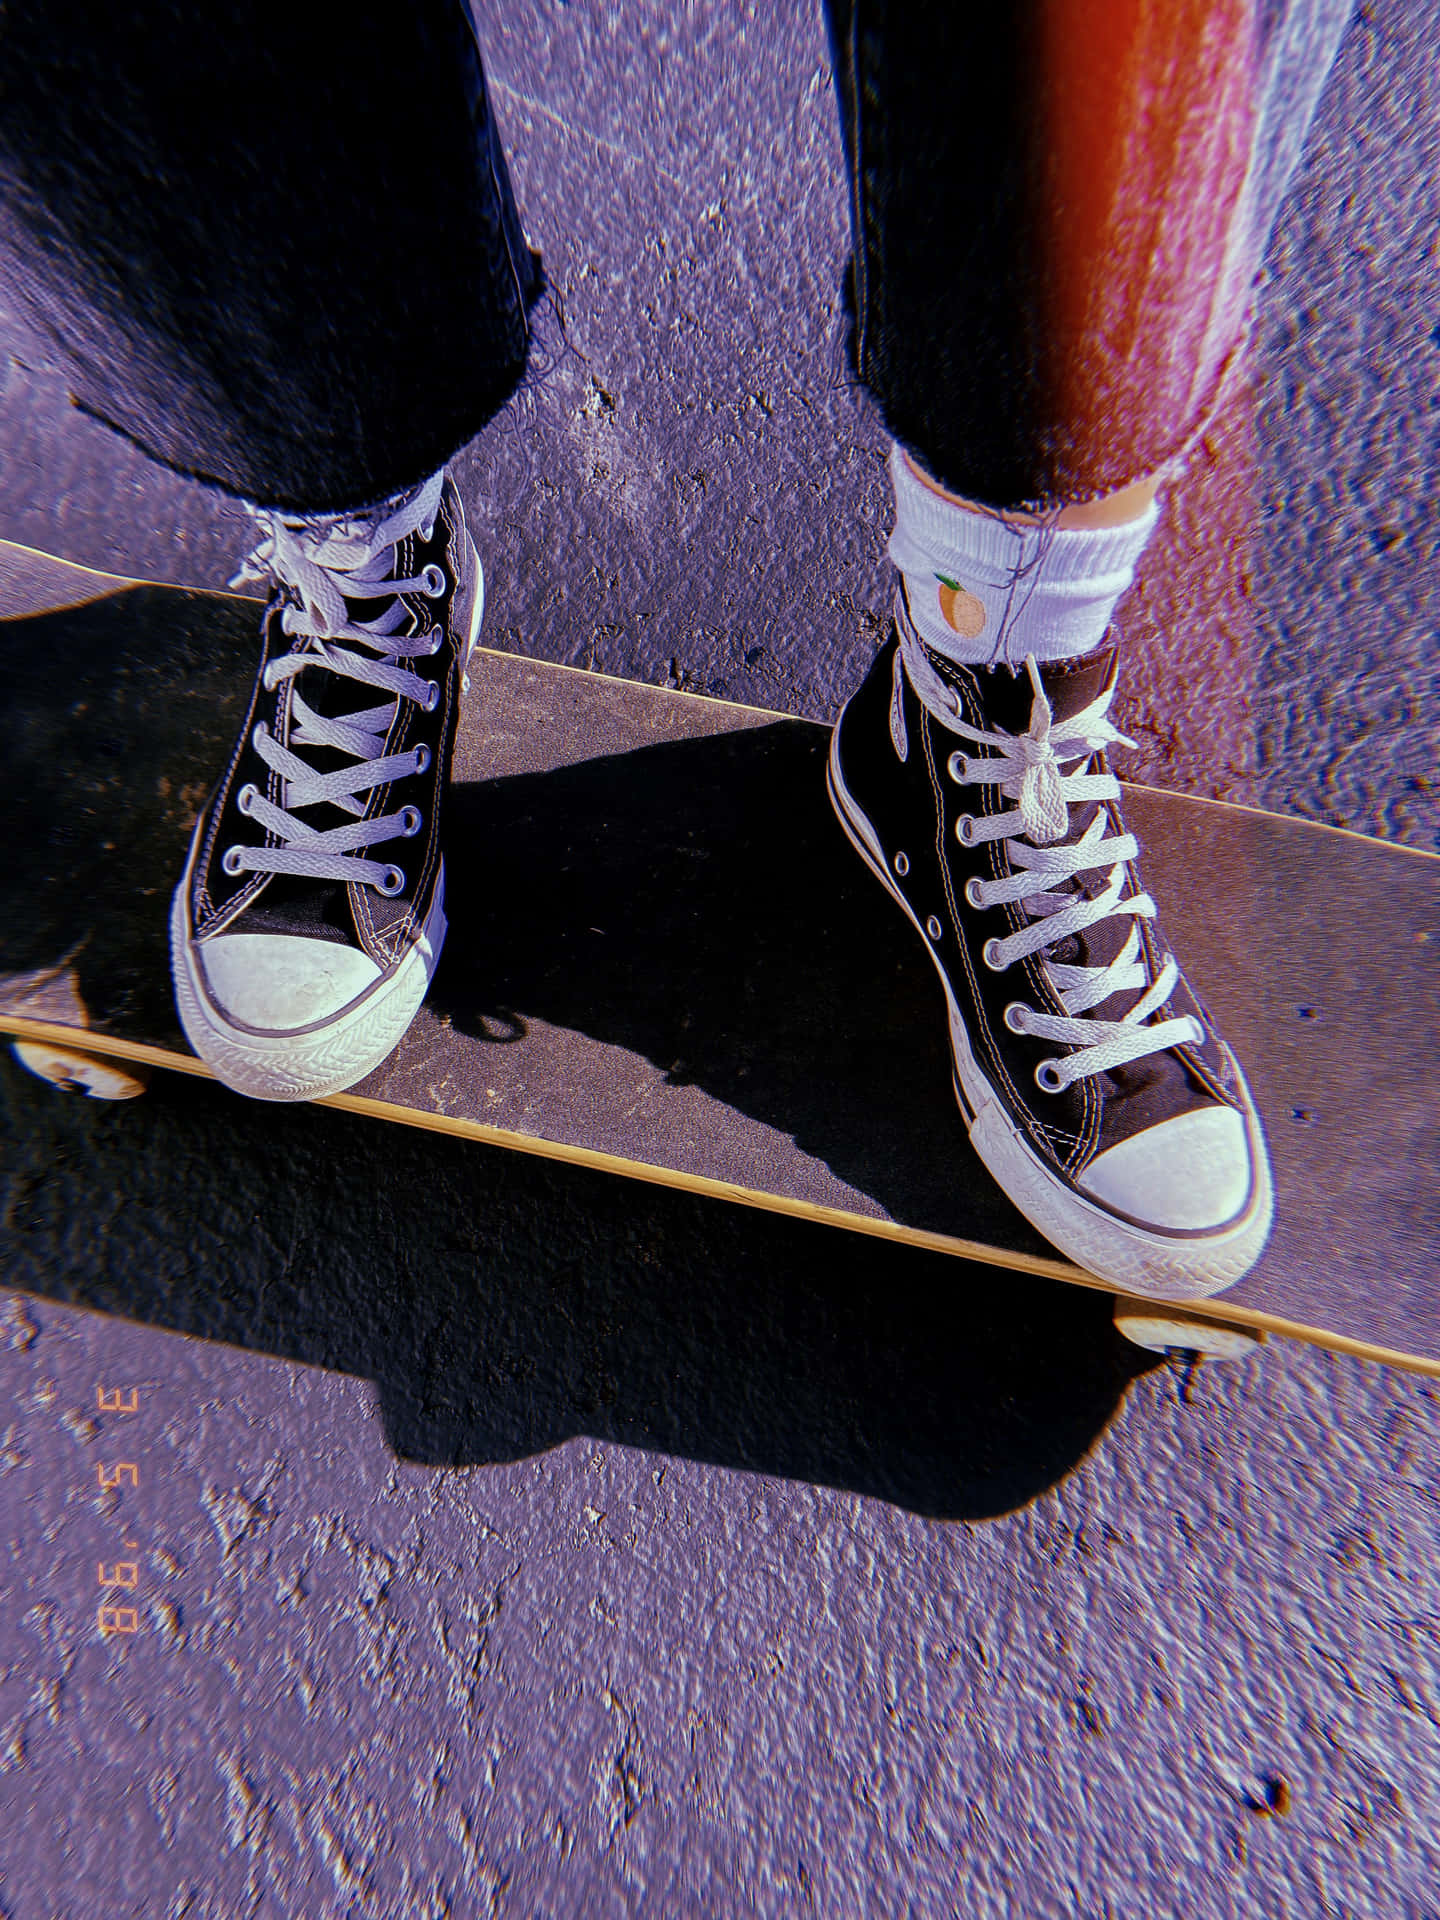 Skate That Way Wallpaper